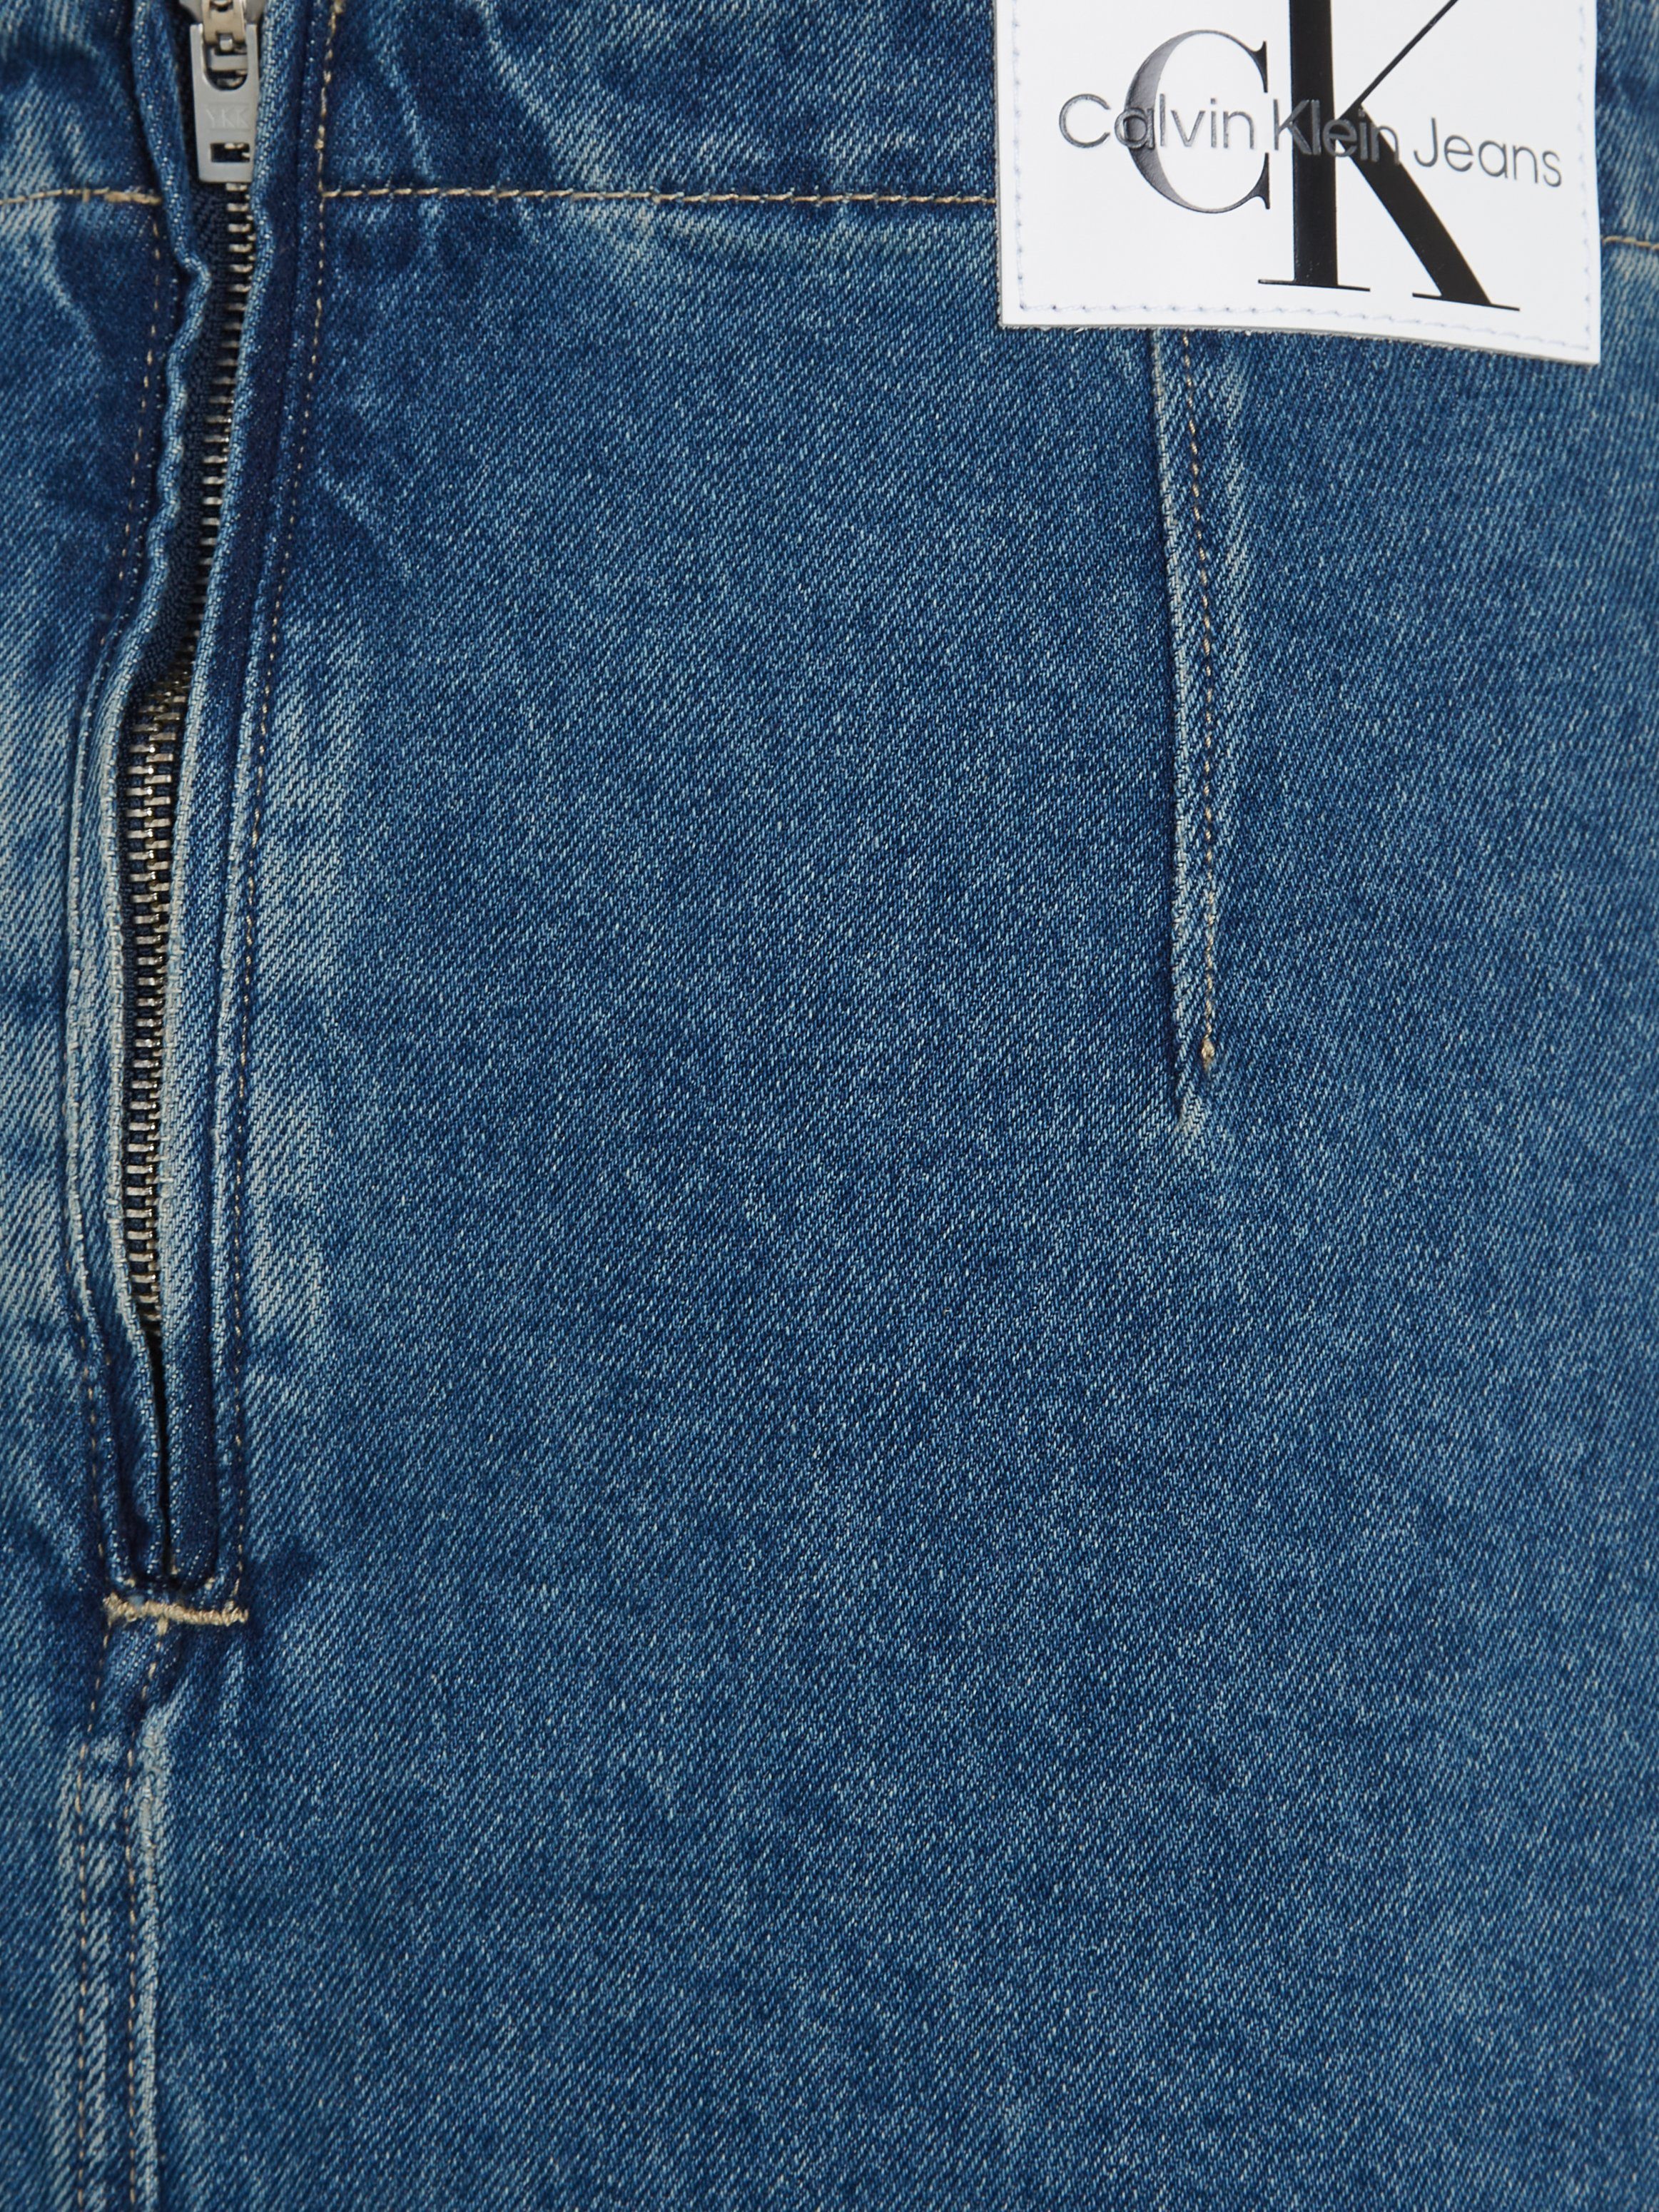 Calvin Klein Jeans rok DARTED DENIM SKIRT